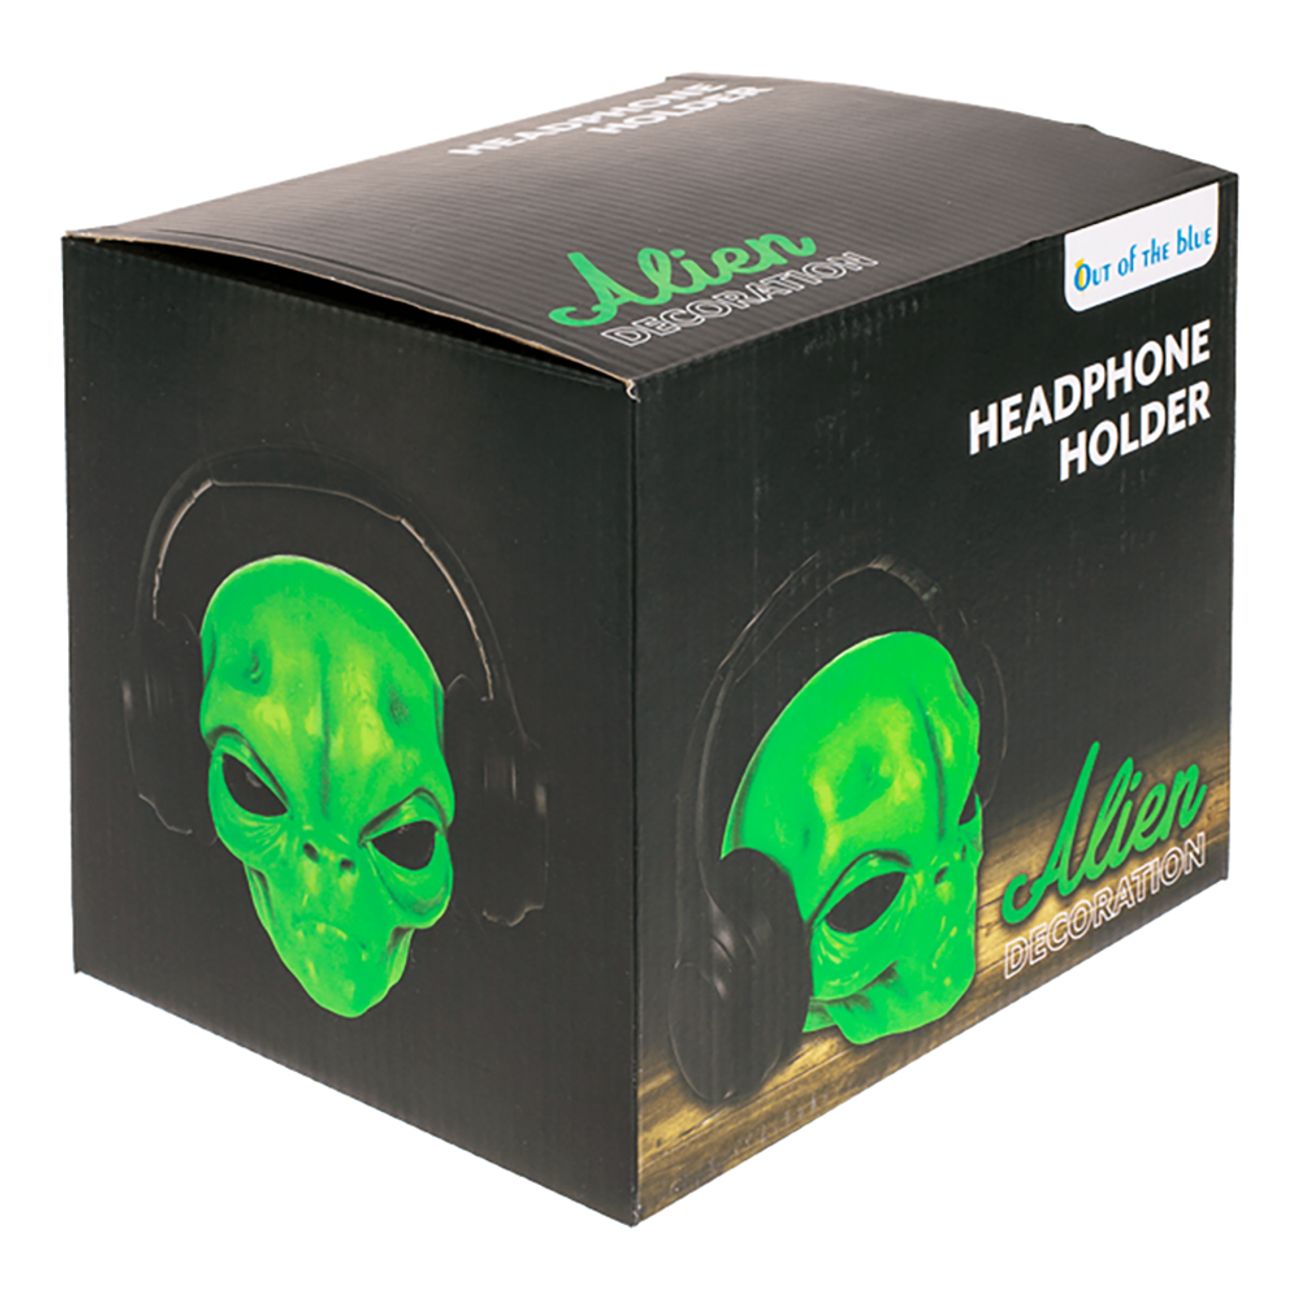 headphone-holder-alien-ca-16-x-18-x-18-cm-made-of-polyresin-in-gift-box-84524-3